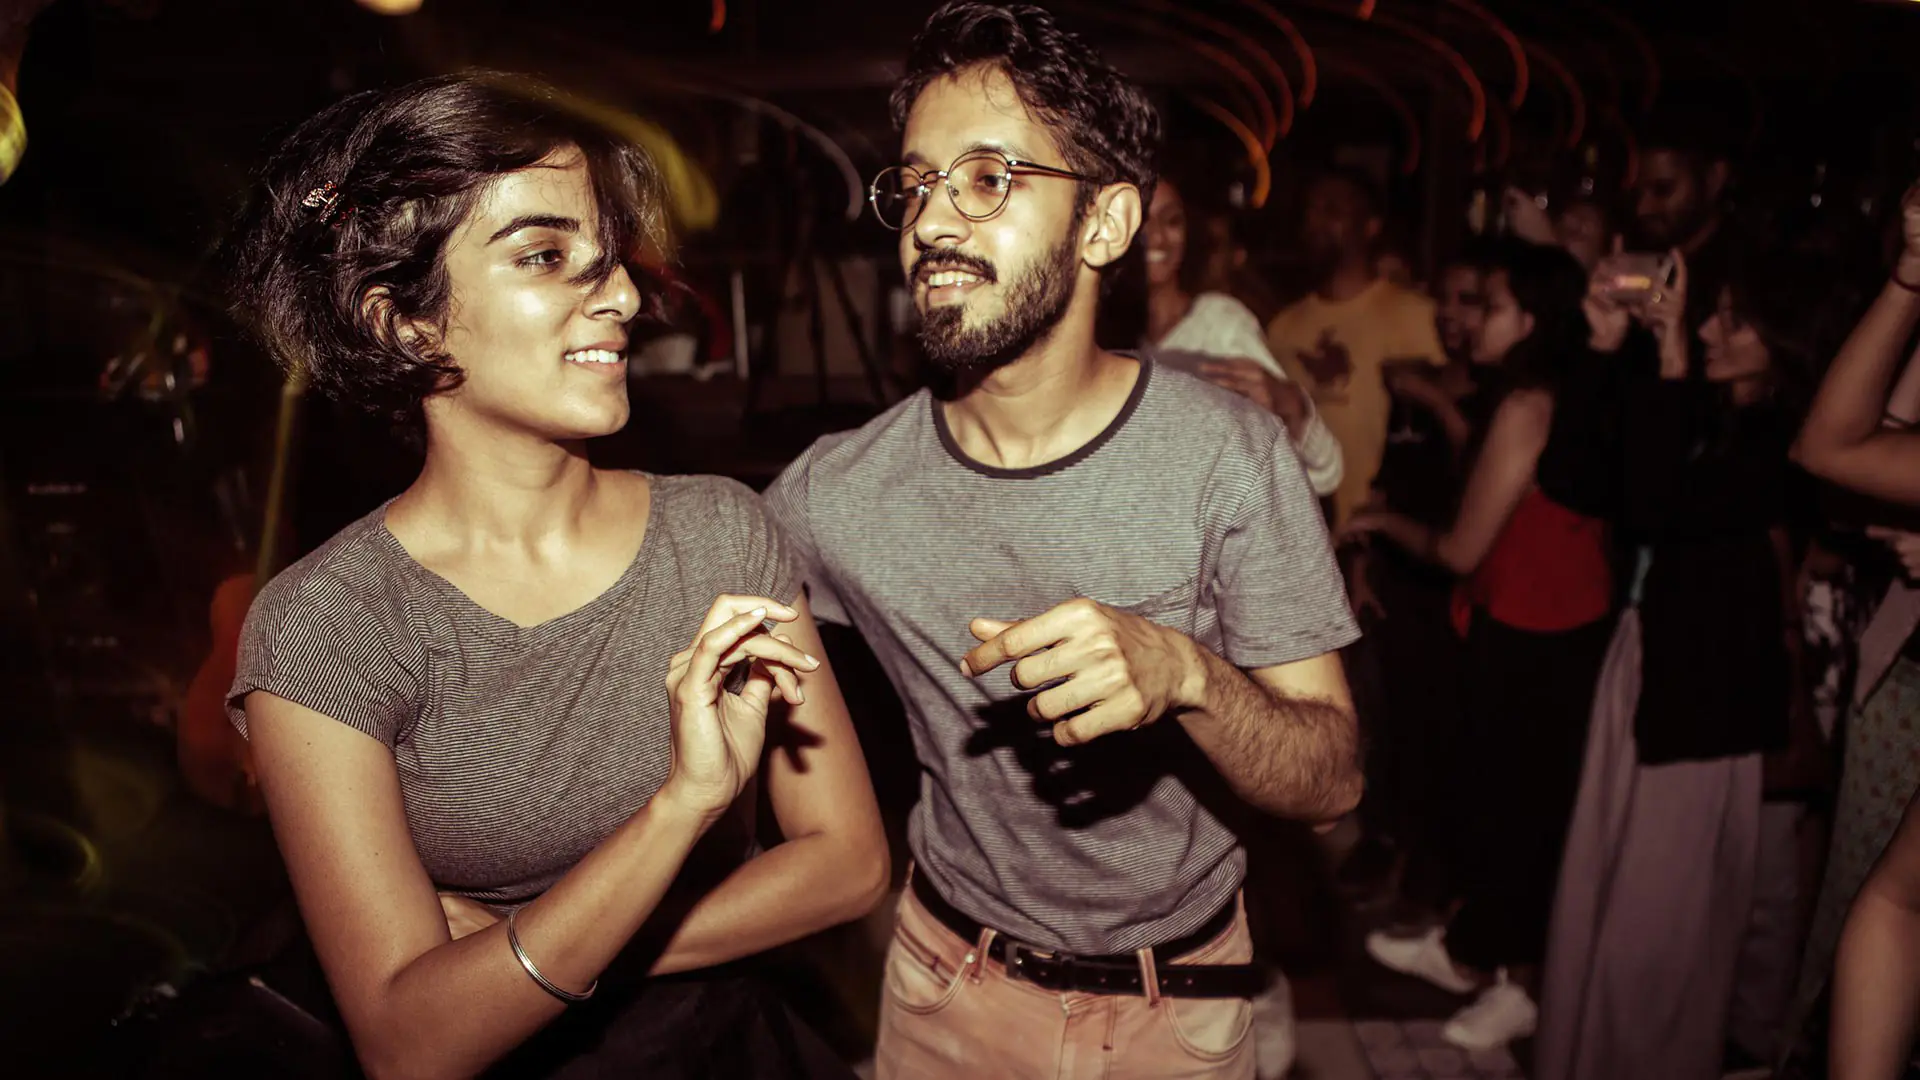 Prekshaa and Sam dancing Lindy Hop at a crowded Mumbai club